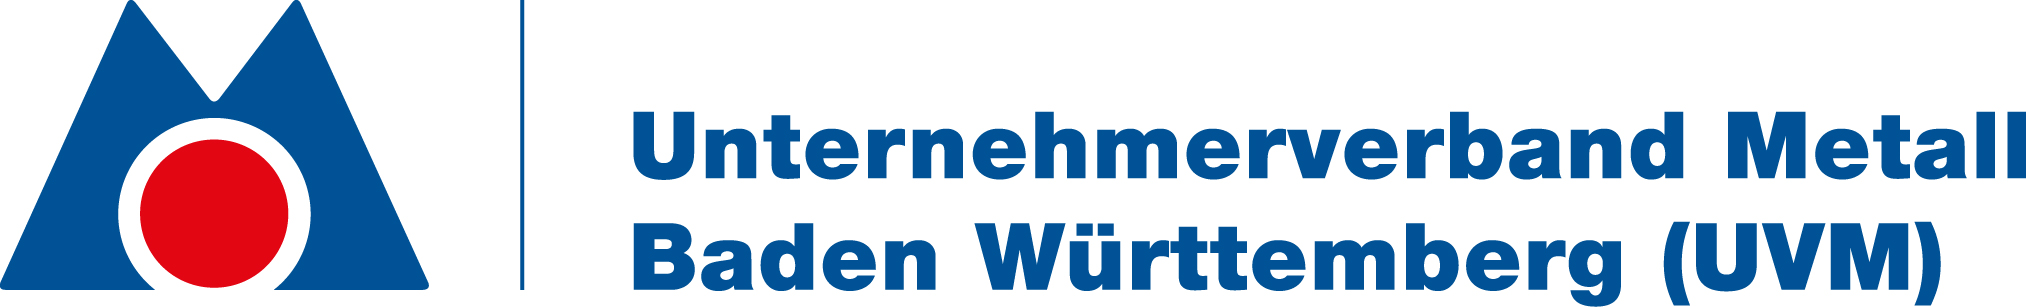 Unternehmerverband Metall Baden-Württemberg